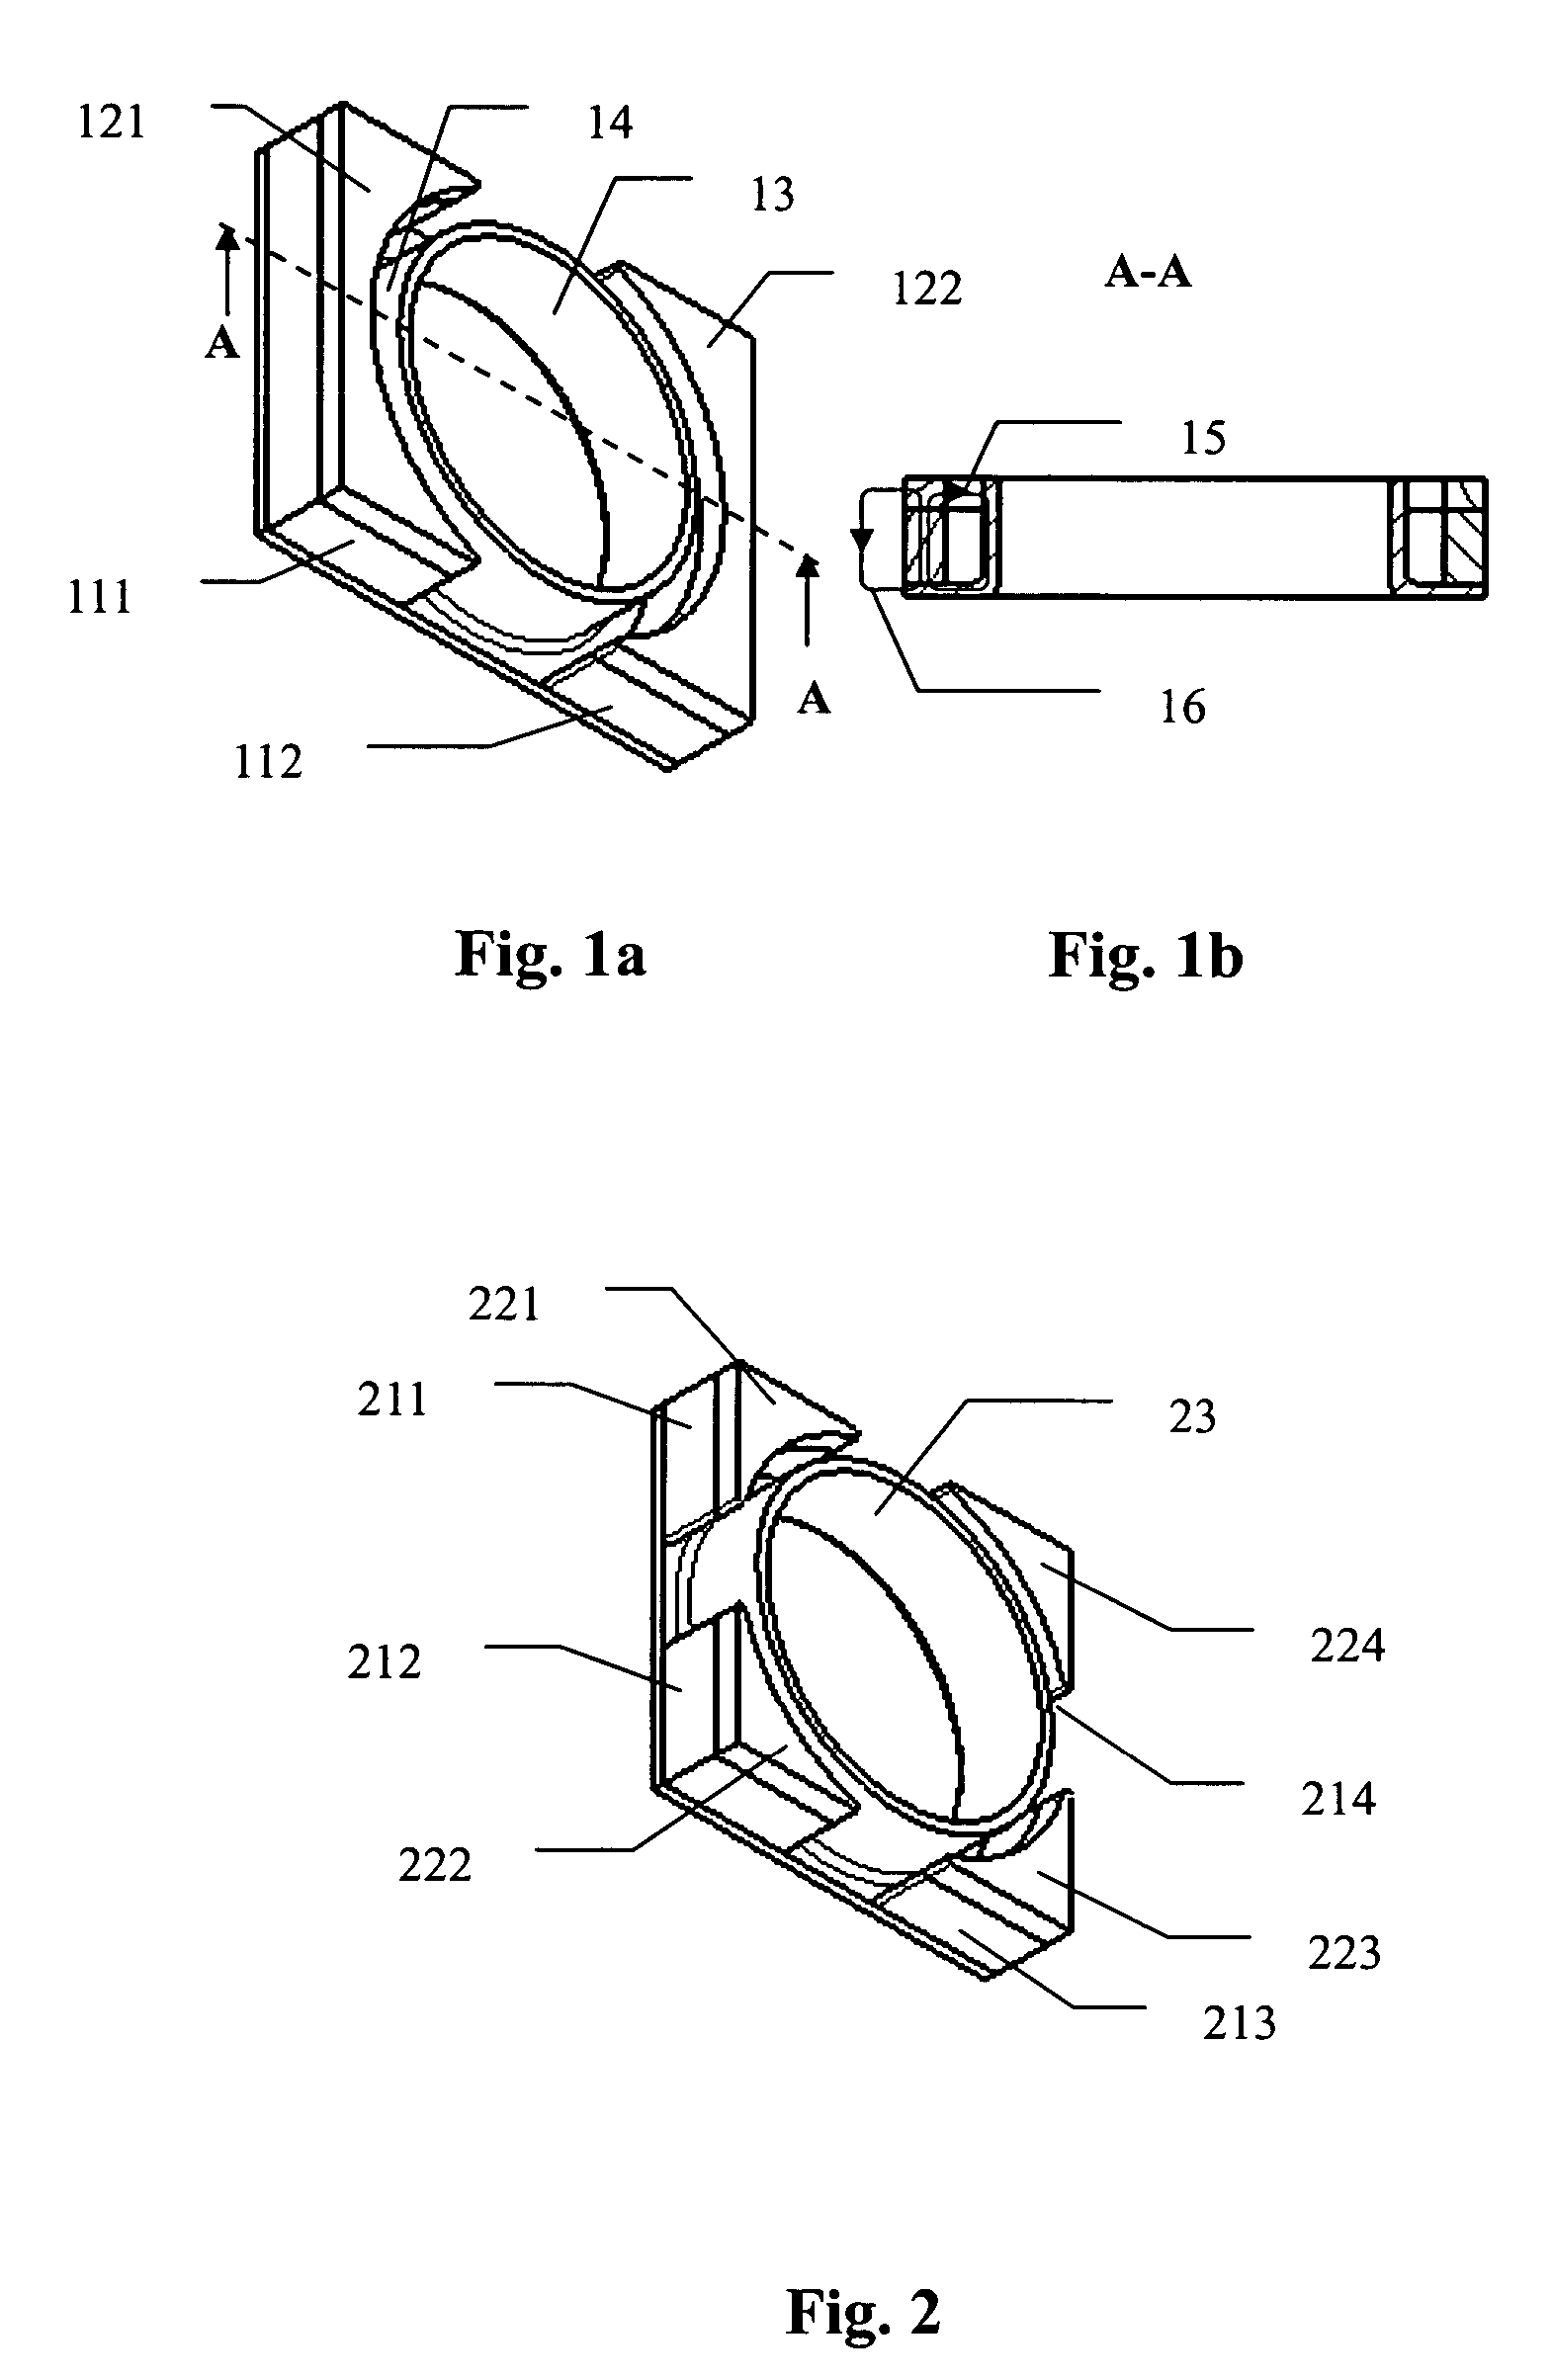 Voice coil motor apparatus